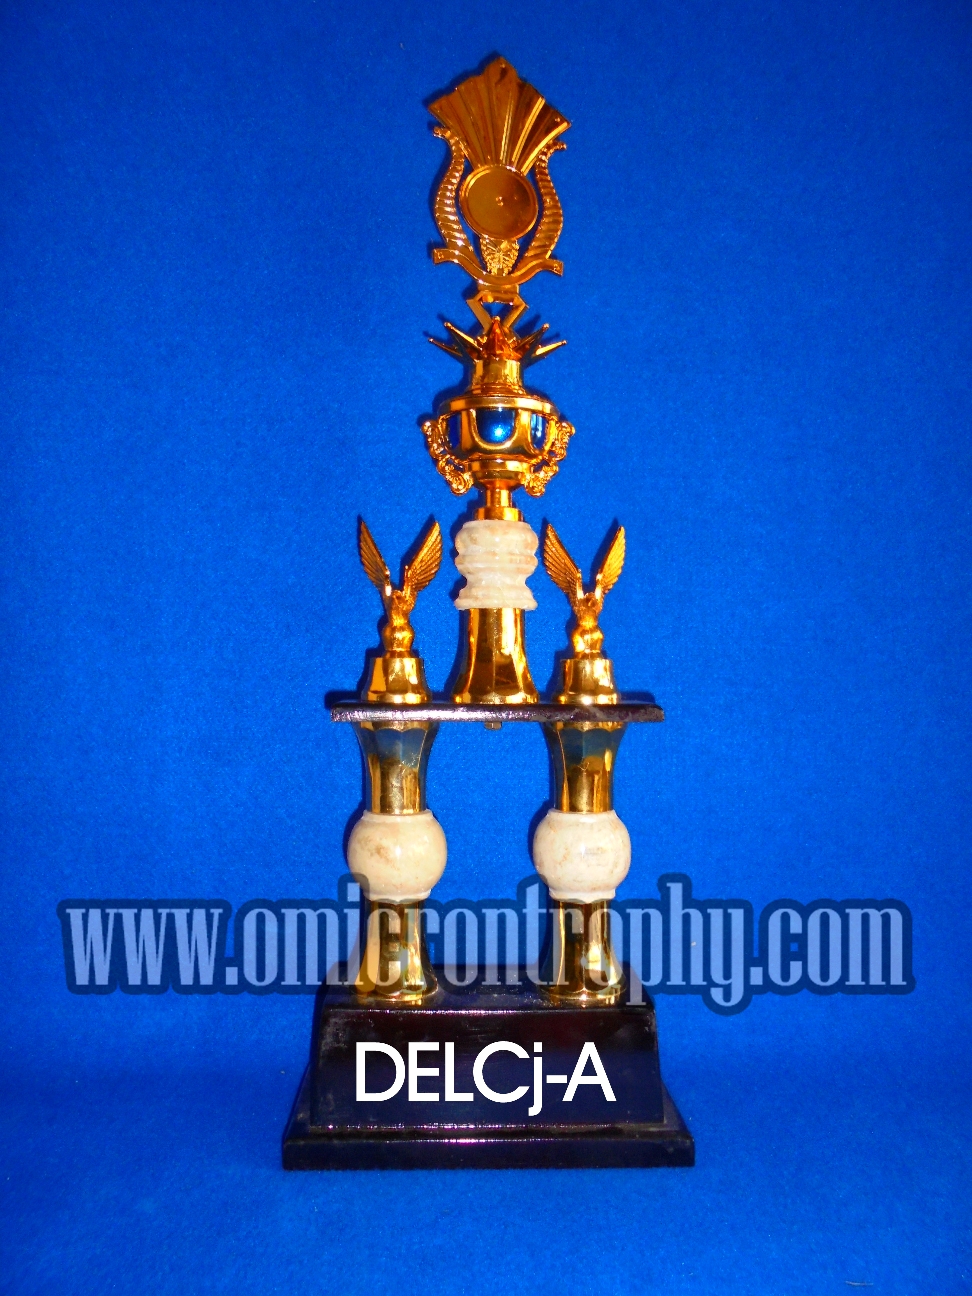 Harga Trophy Murah, Daftar Harga Trophy, Katalog Piala Trophy